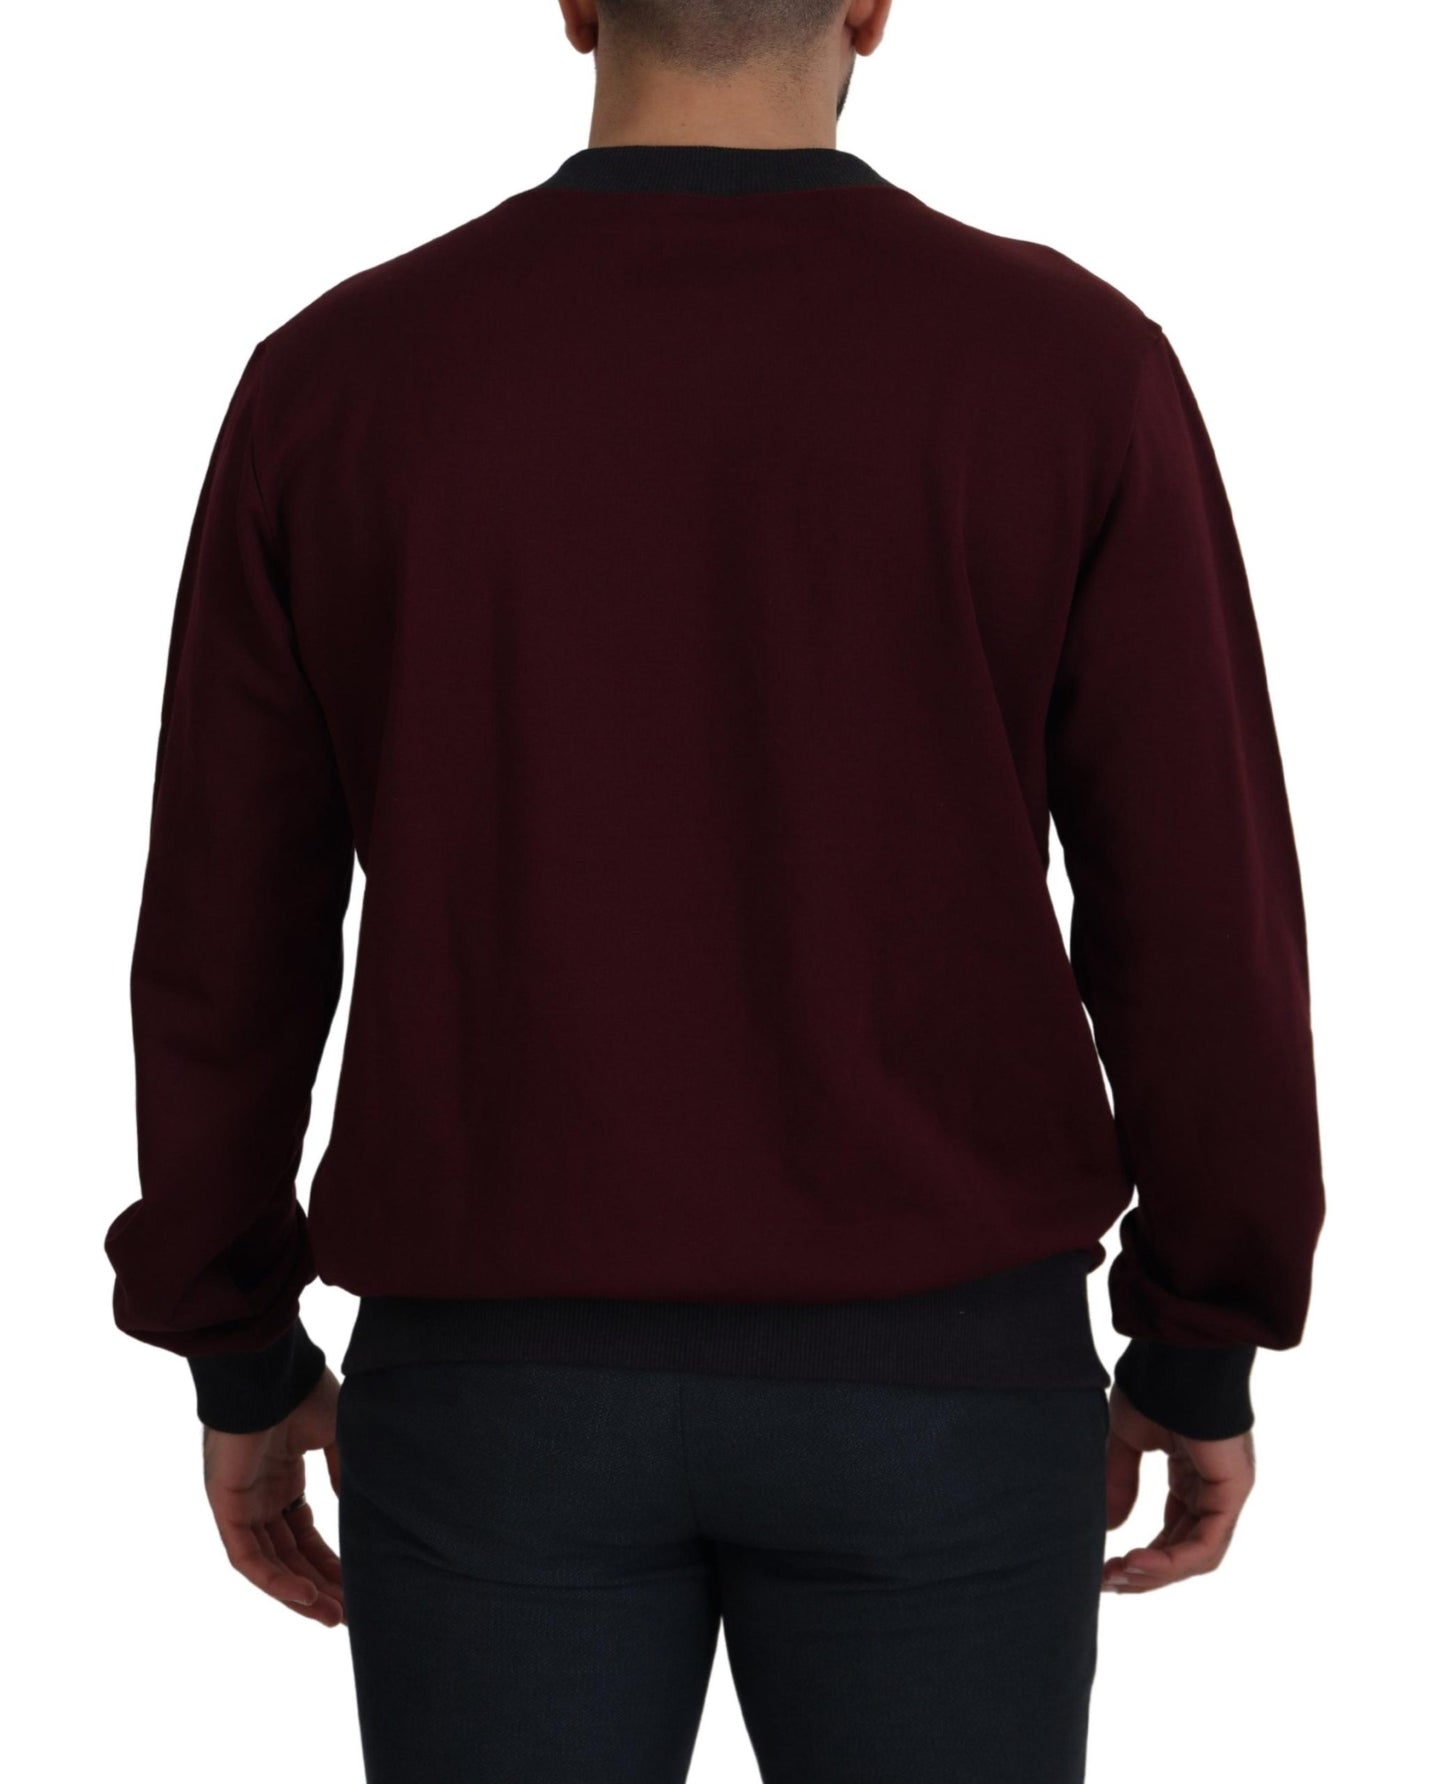 Maroon Cotton Crewneck Pullover Sweater